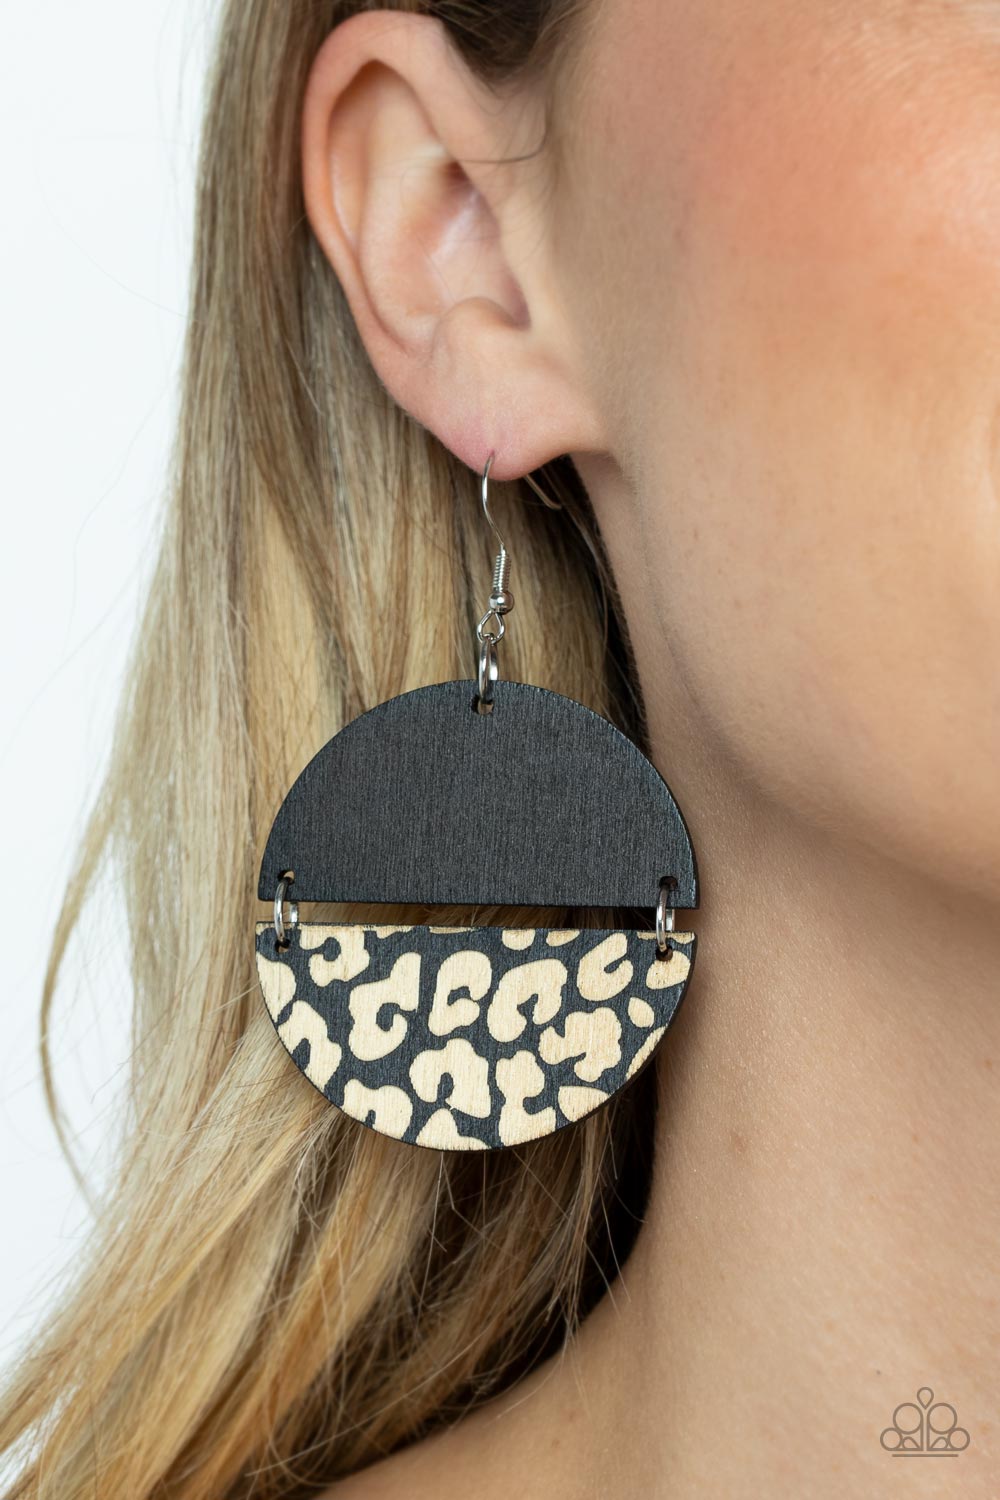 Jungle Catwalk Black Wood Cheetah Print Earrings - Paparazzi Accessories-on model - CarasShop.com - $5 Jewelry by Cara Jewels